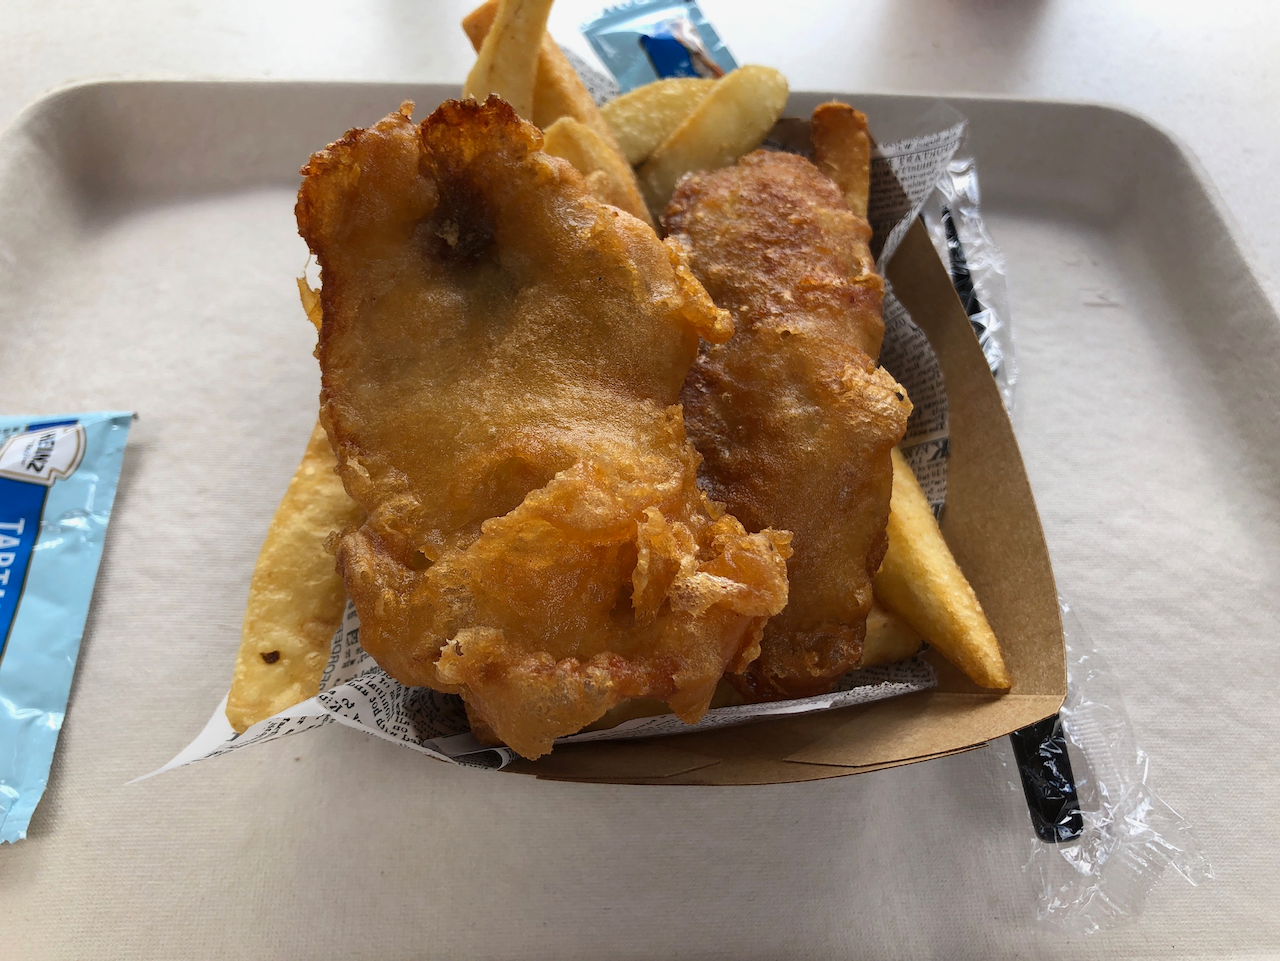 Fish & Chips